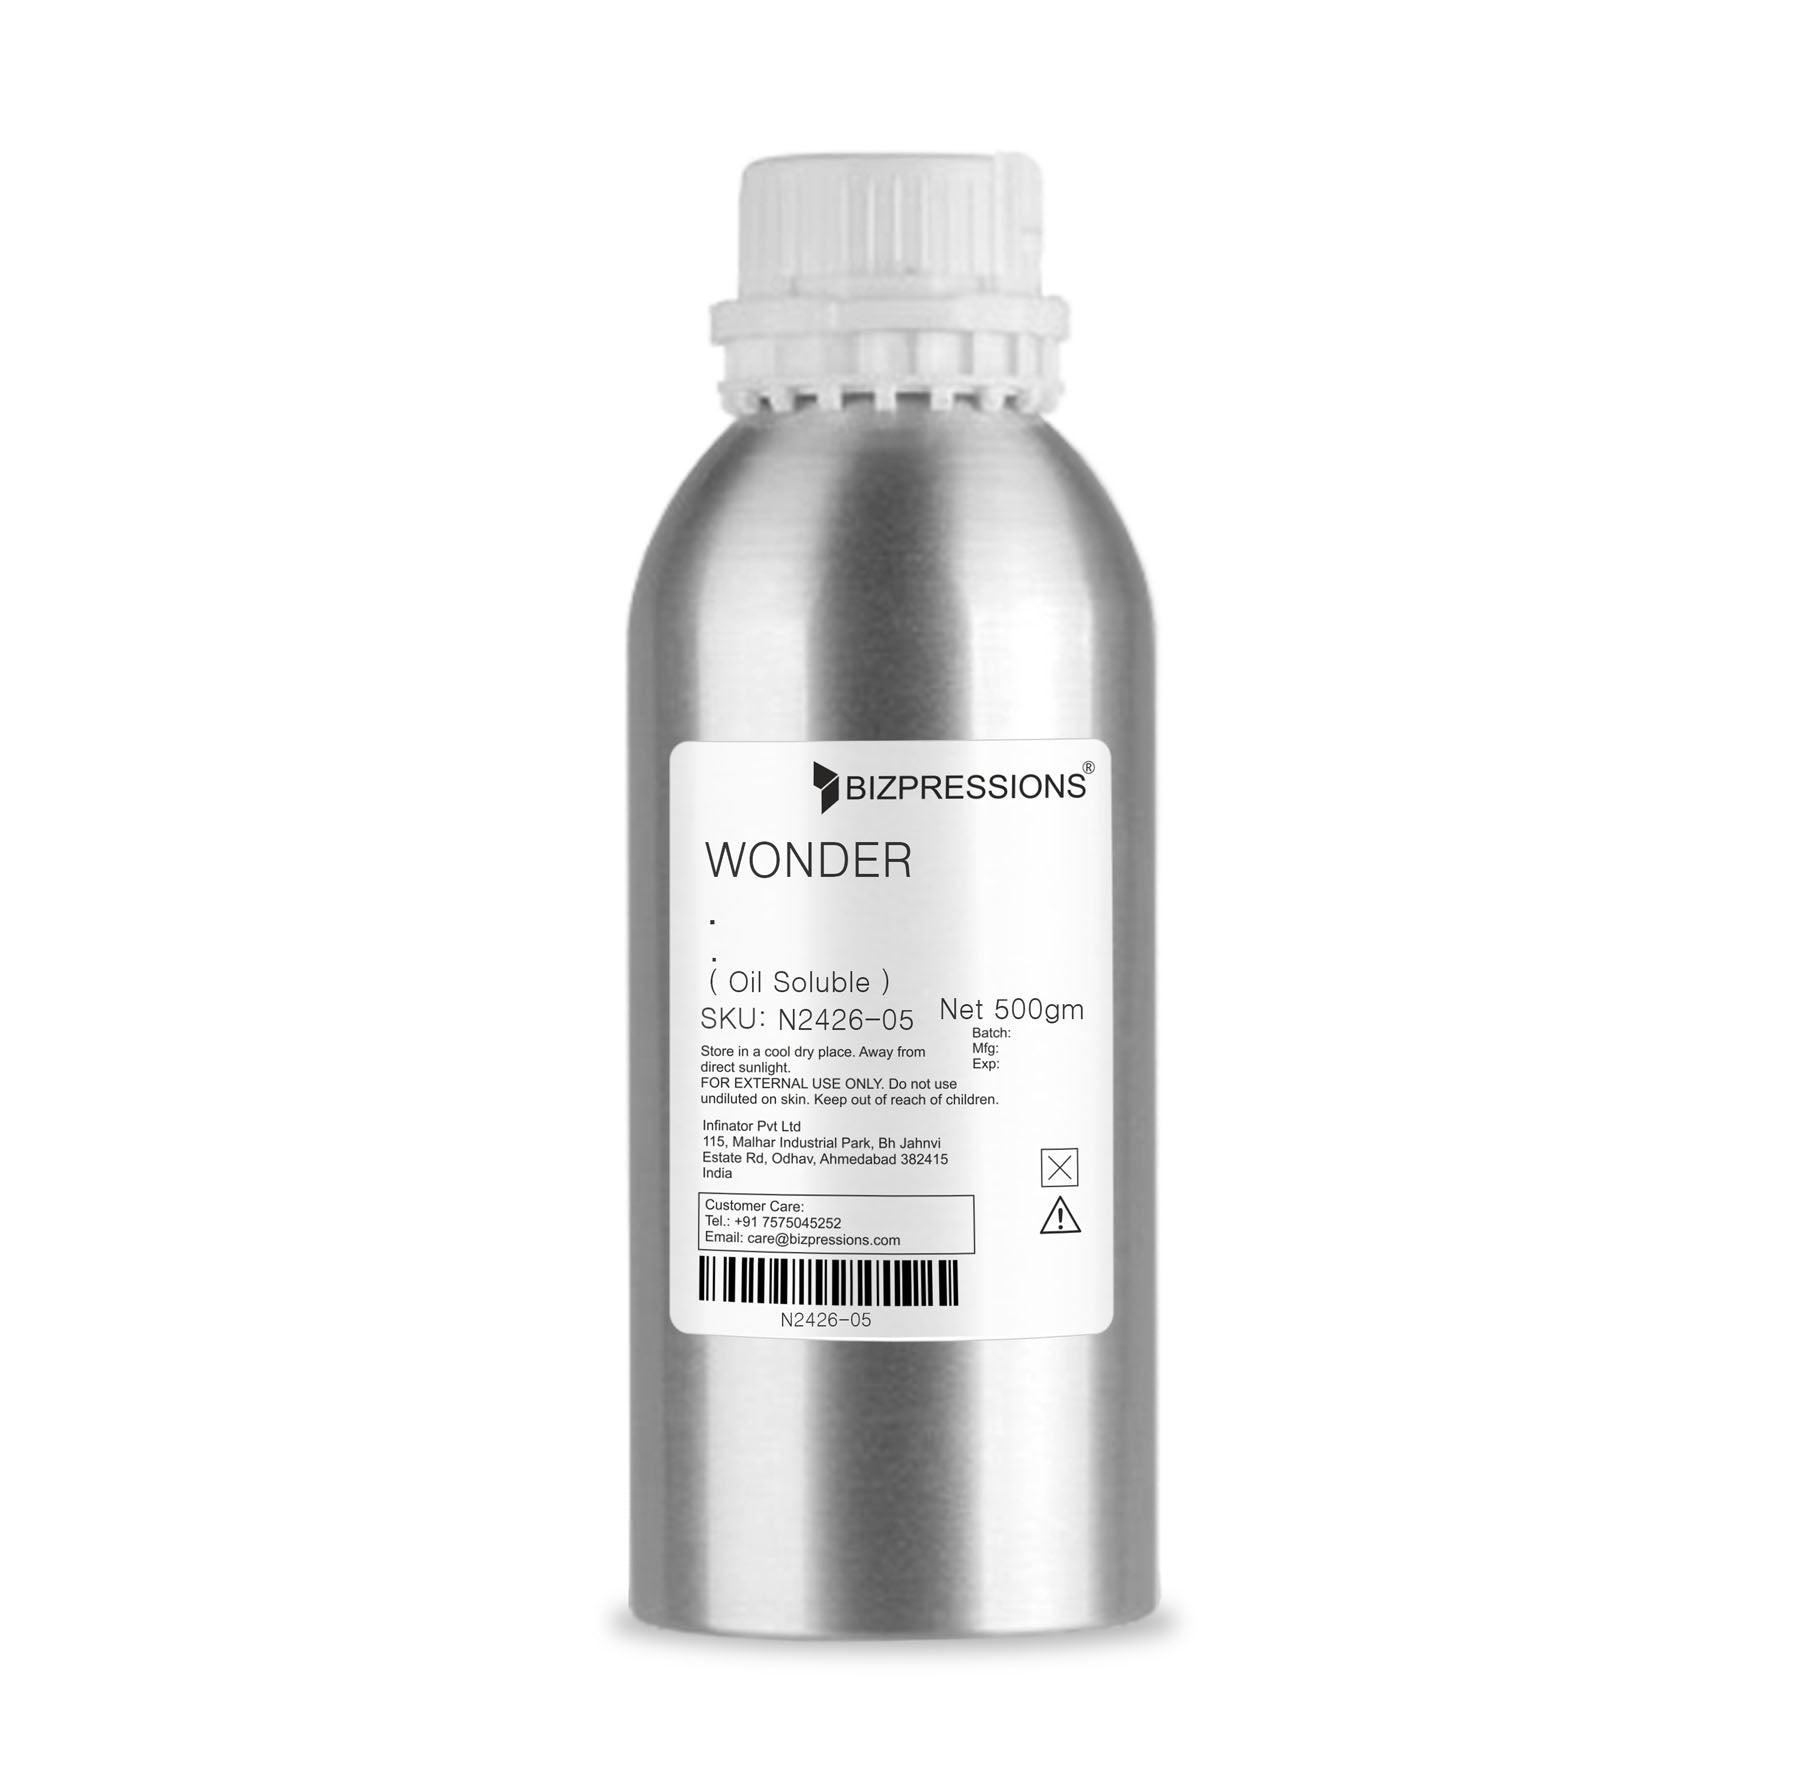 WONDER - Fragrance ( Oil Soluble ) - 500 gm